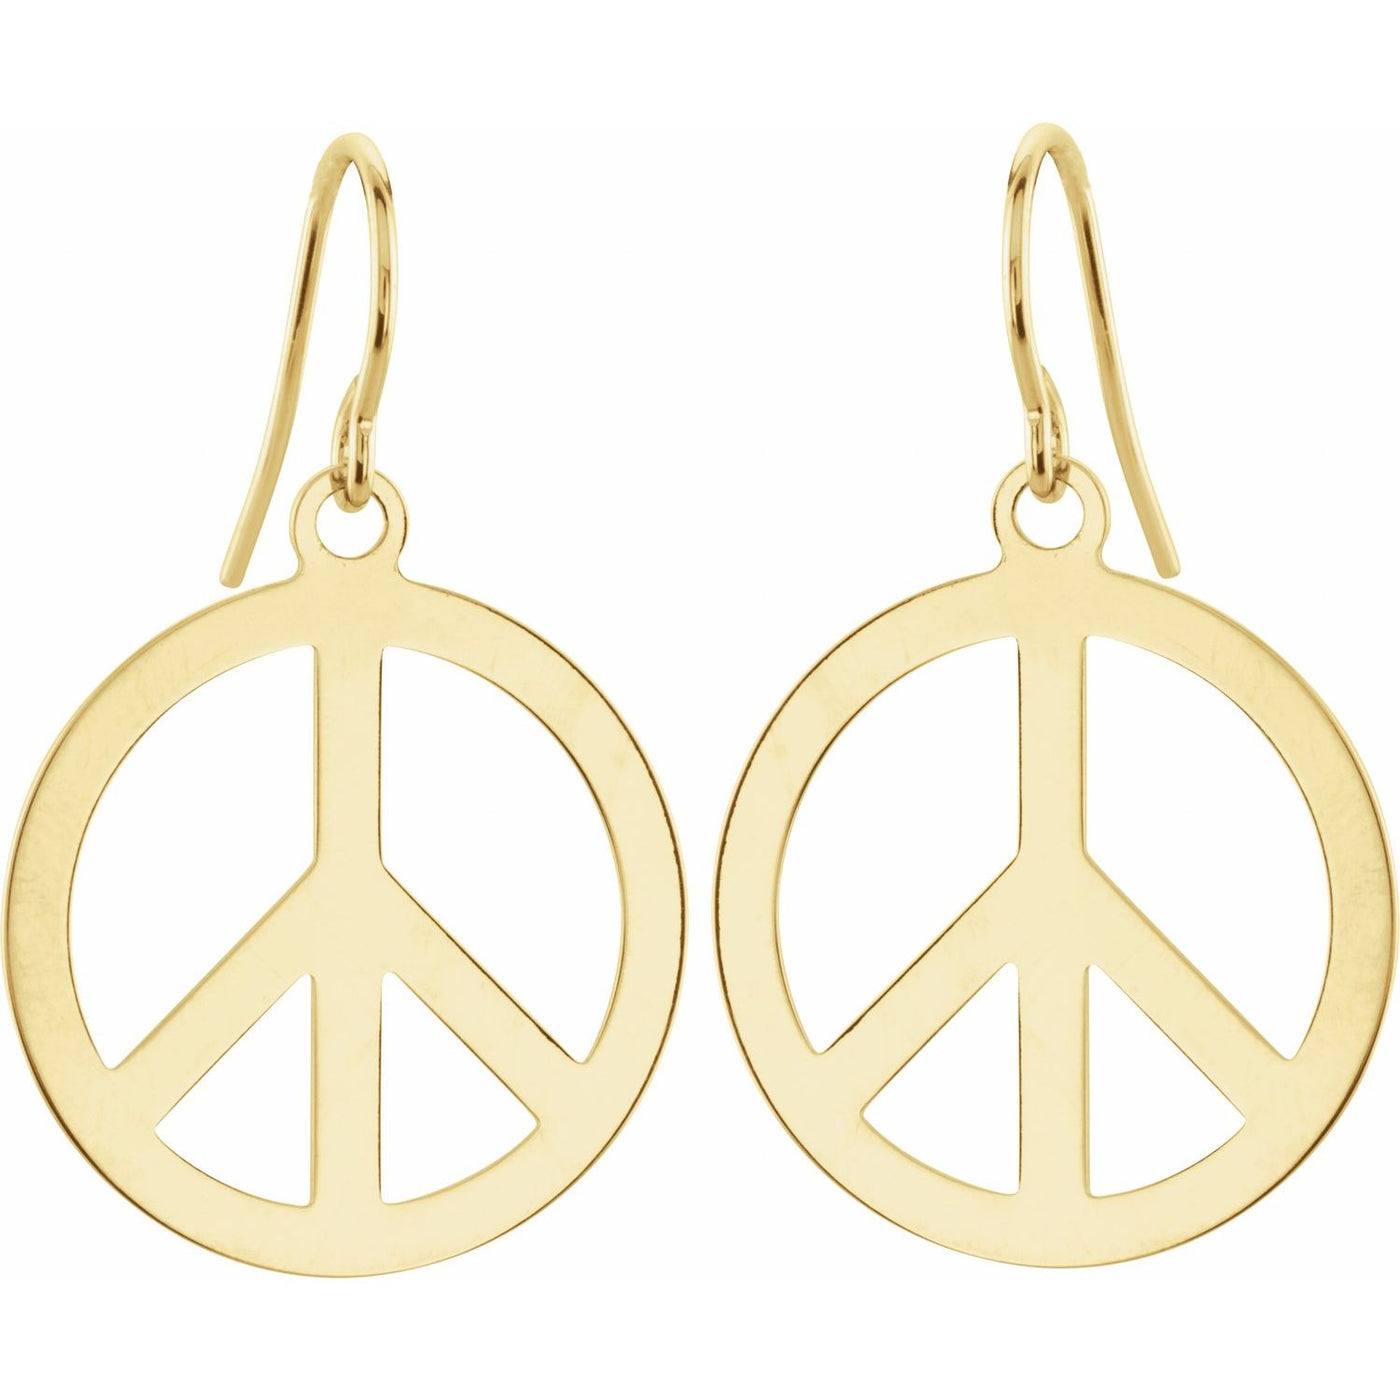 14K Gold Peace Sign Earrings